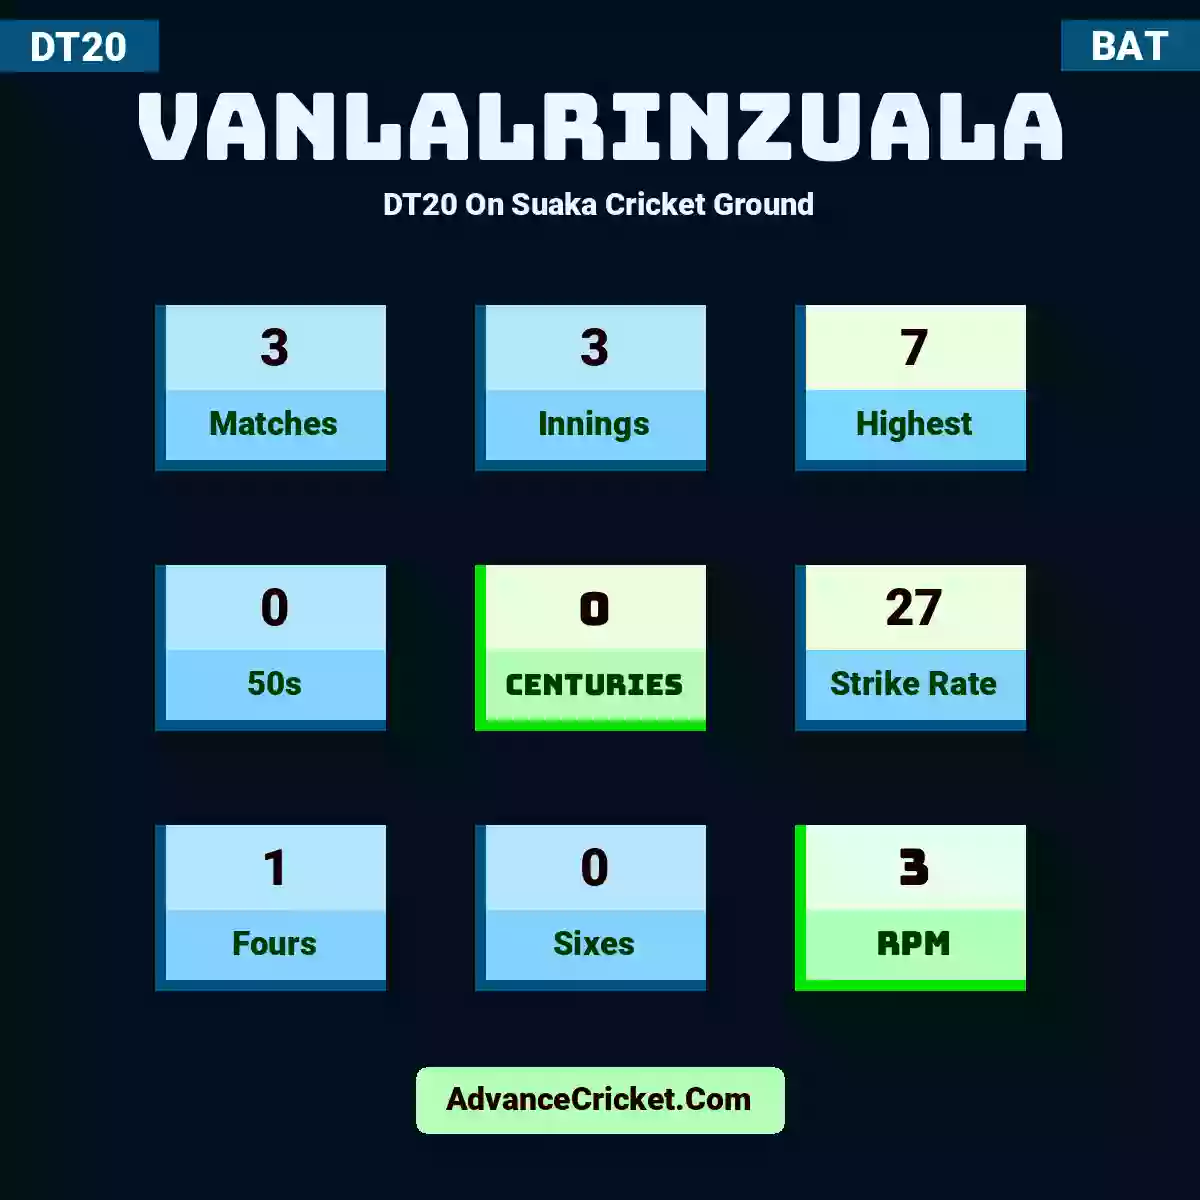 Vanlalrinzuala DT20  On Suaka Cricket Ground, Vanlalrinzuala played 3 matches, scored 7 runs as highest, 0 half-centuries, and 0 centuries, with a strike rate of 27. Vanlalrinzuala hit 1 fours and 0 sixes, with an RPM of 3.